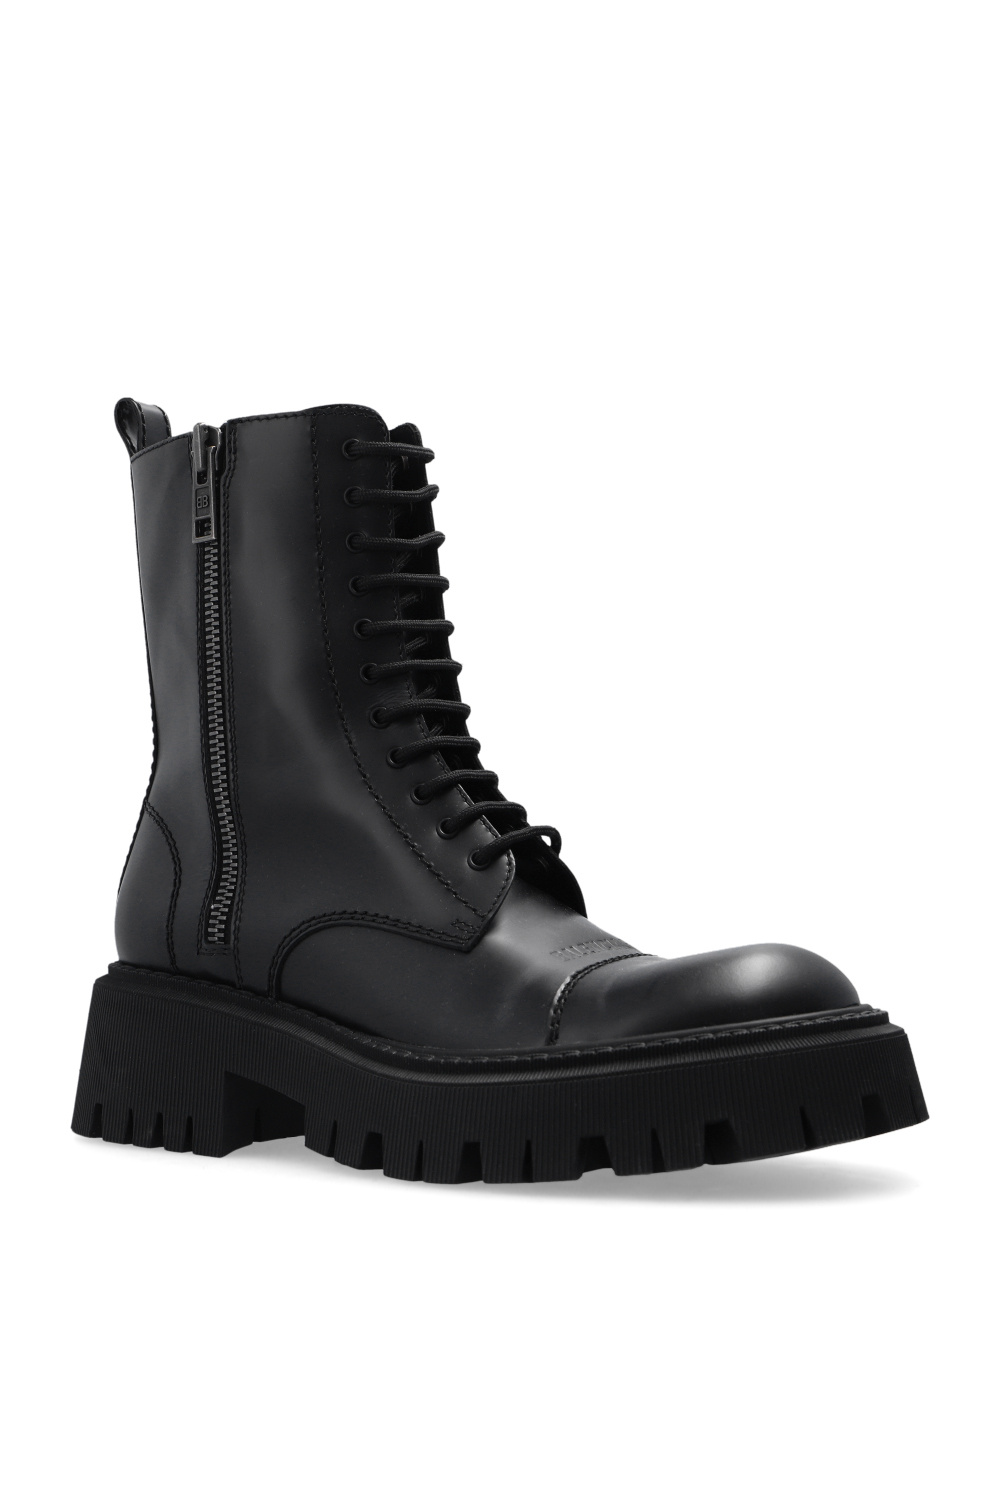 Balenciaga 'Tractor' combat boots | Women's Shoes | Vitkac